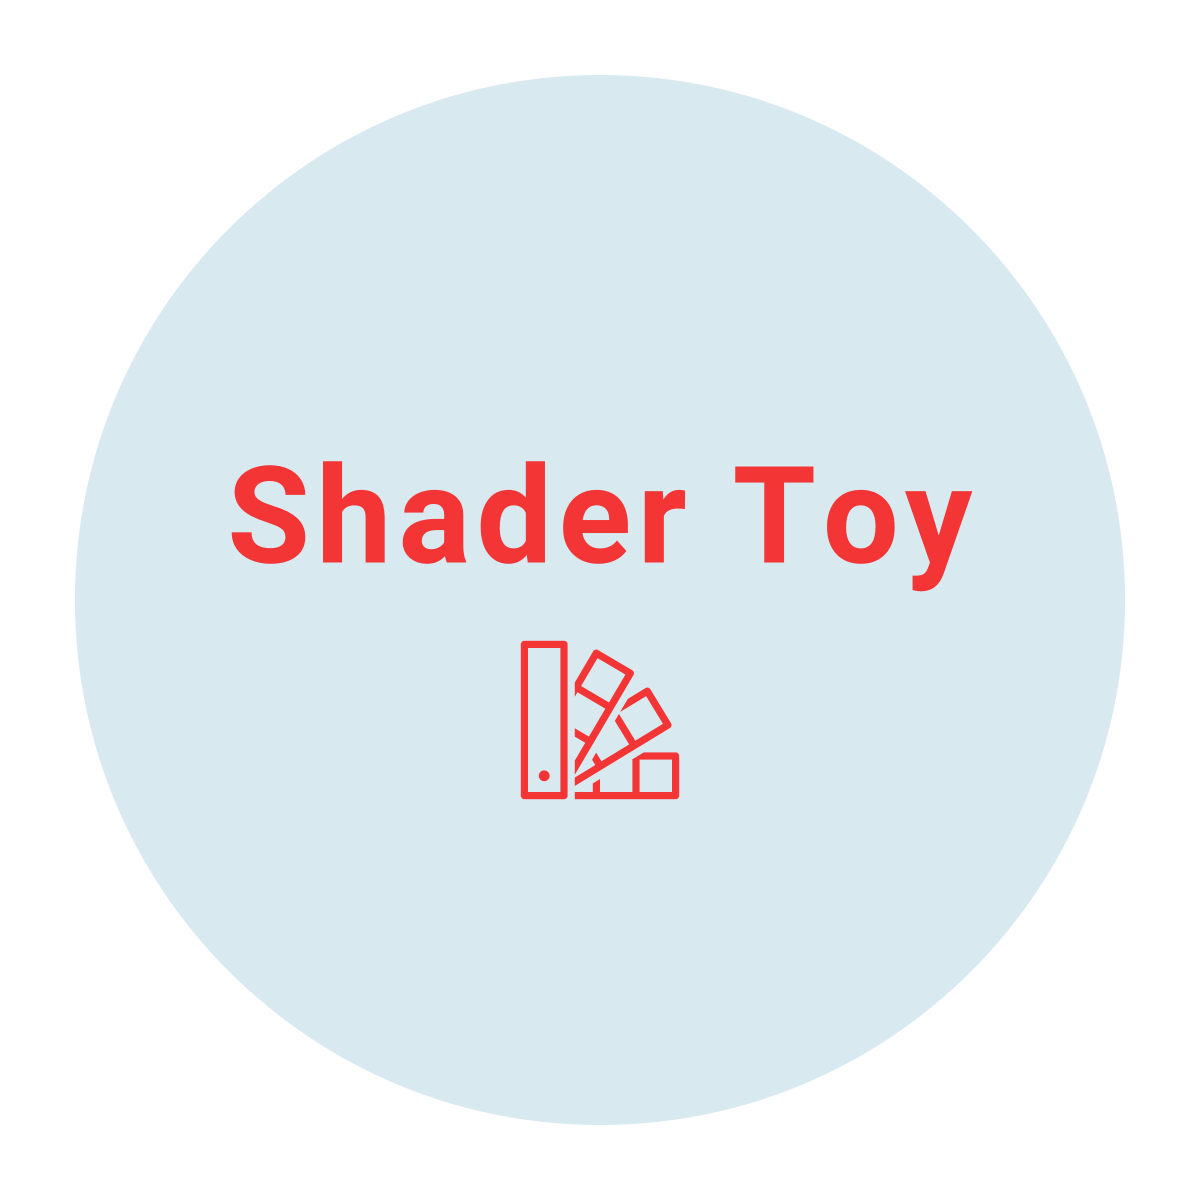 Shader Toy